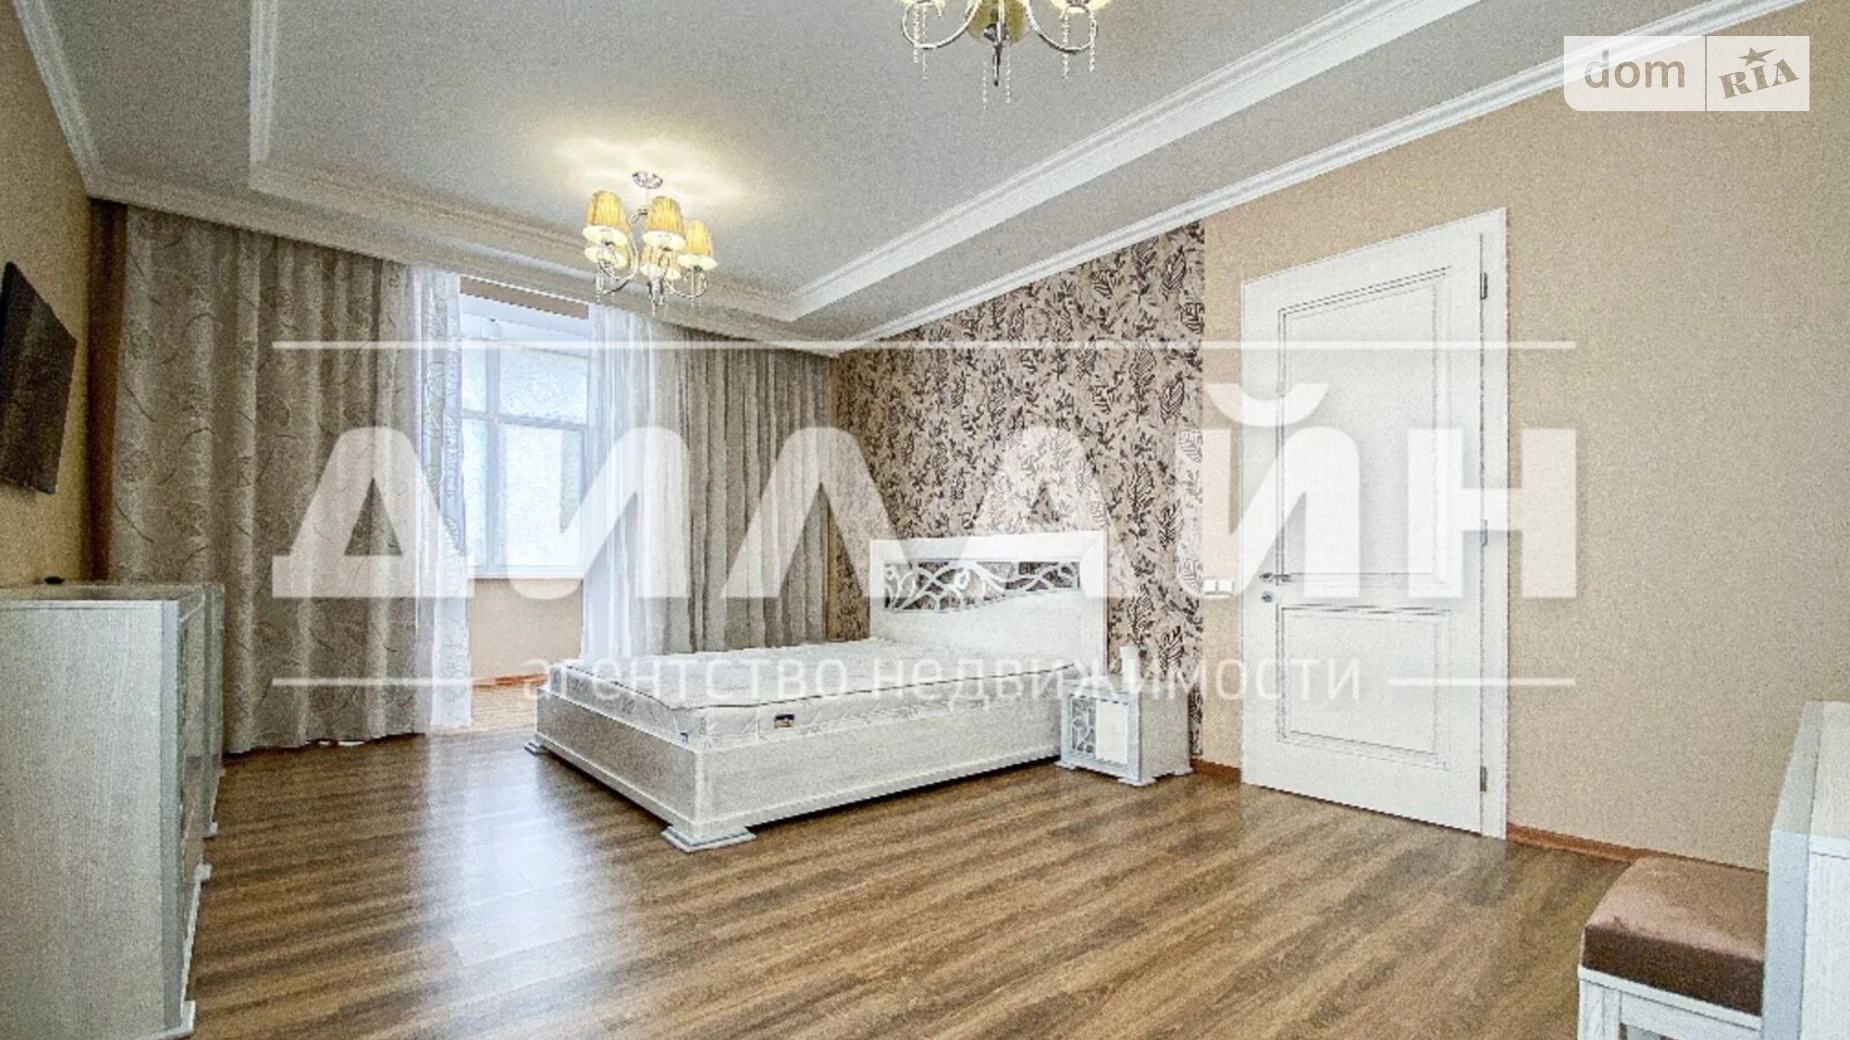 4-комнатная квартира 170 кв. м в Запорожье, ул. Розваги